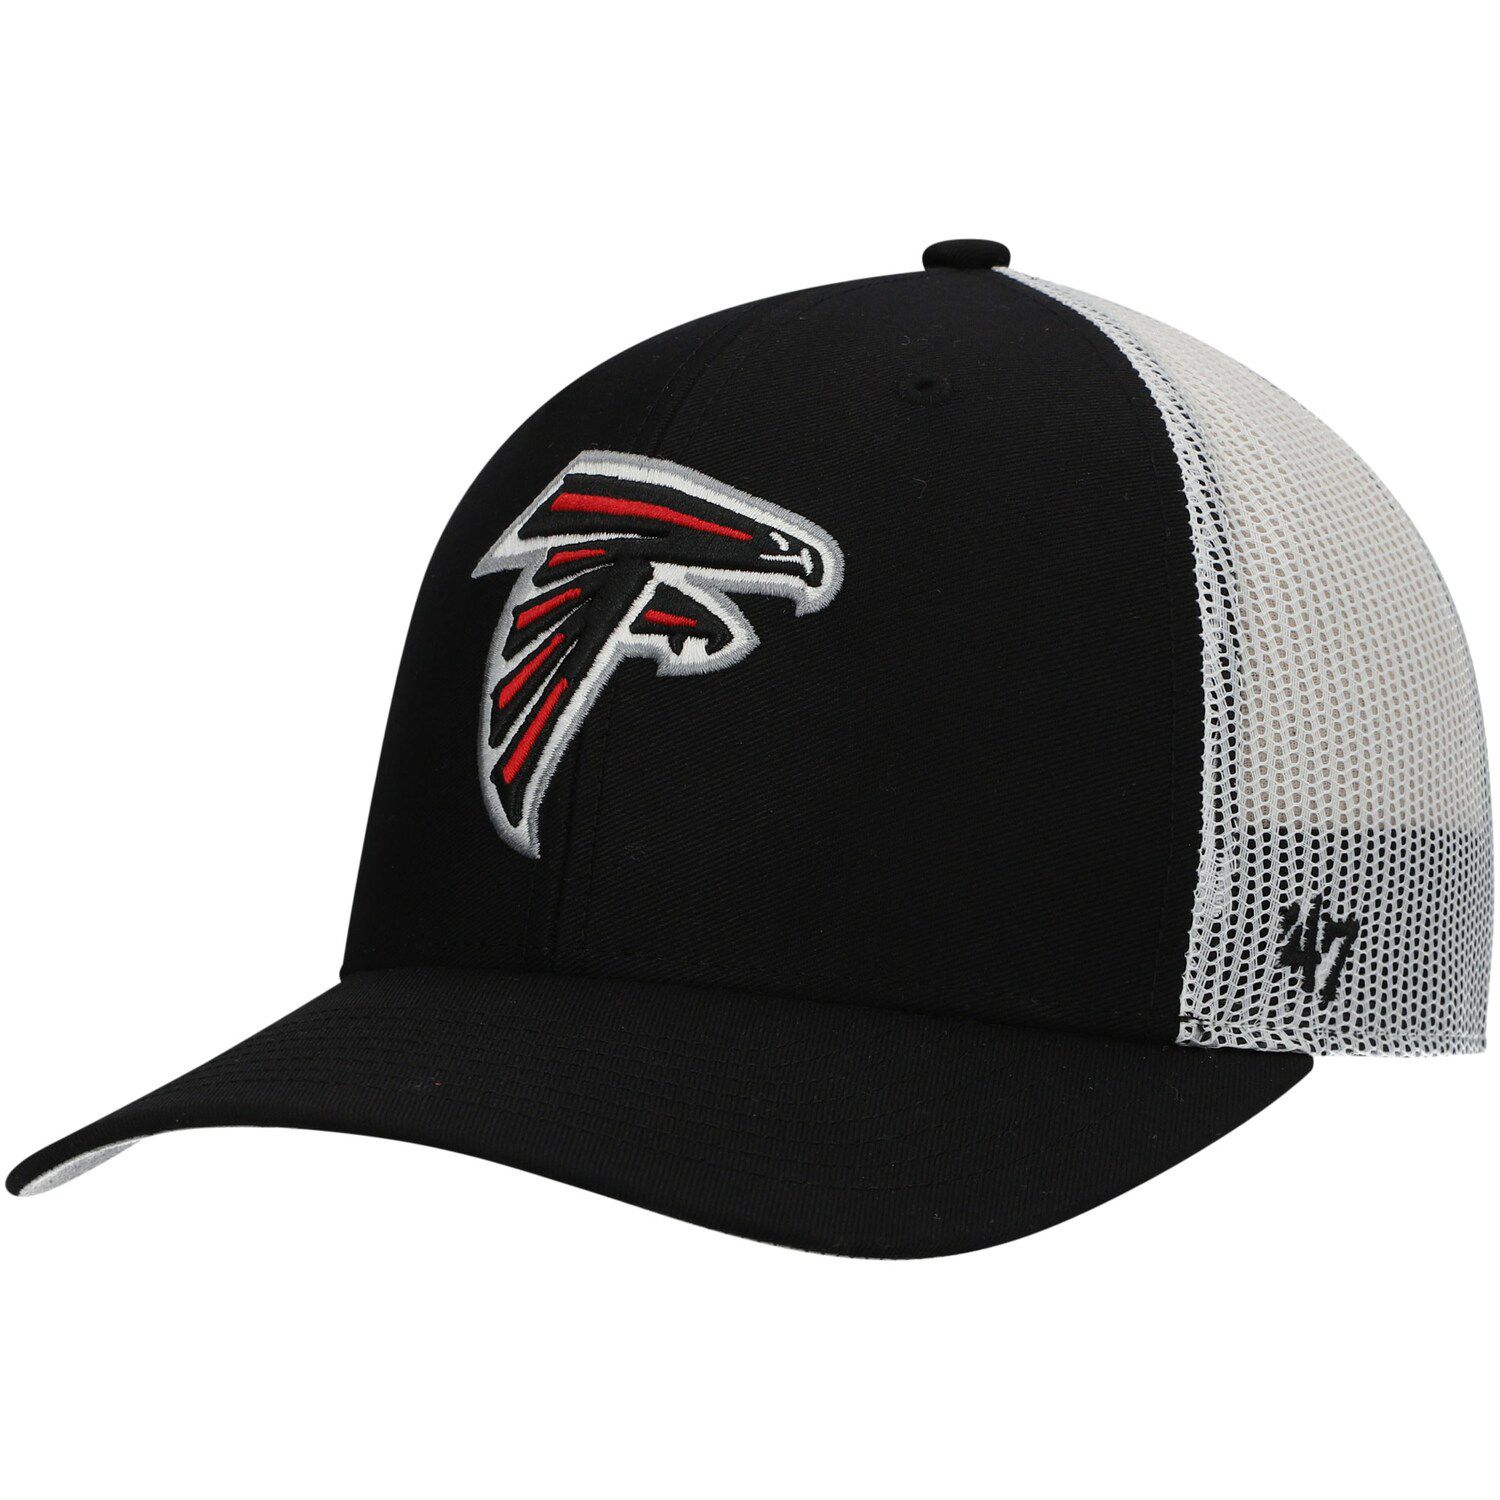 Image for Unbranded Men's '47 Black/White Atlanta Falcons Trucker Snapback Hat at Kohl's.